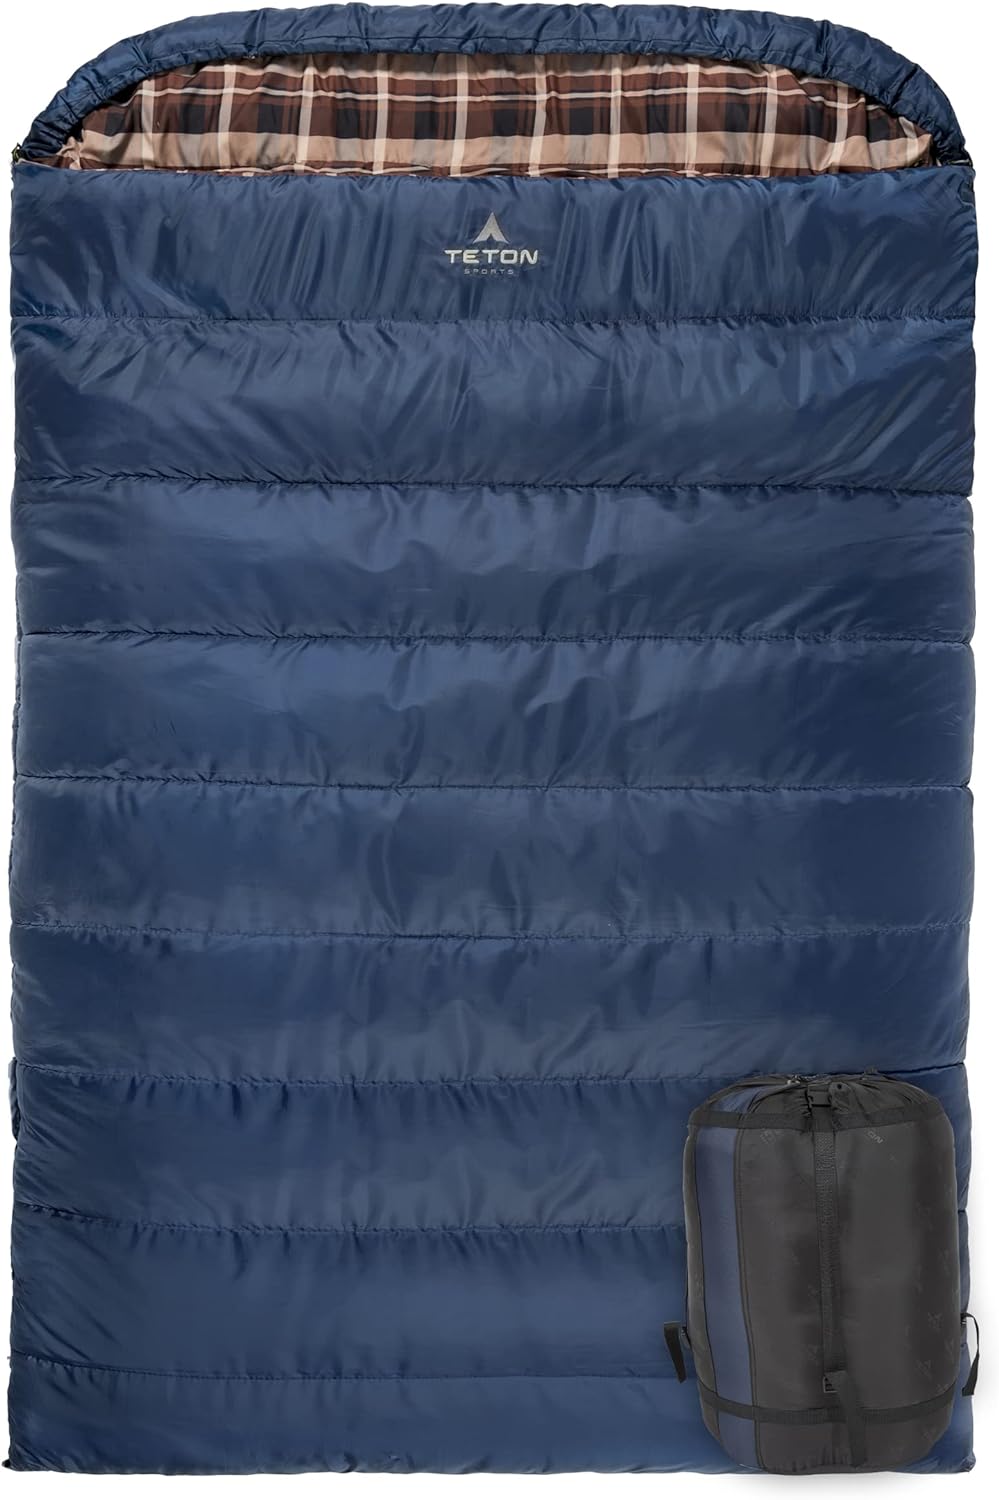 TETON Sports: Mammoth 20F Queen Size Double Sleeping Bag (Blue) $80.44 + Free Shipping